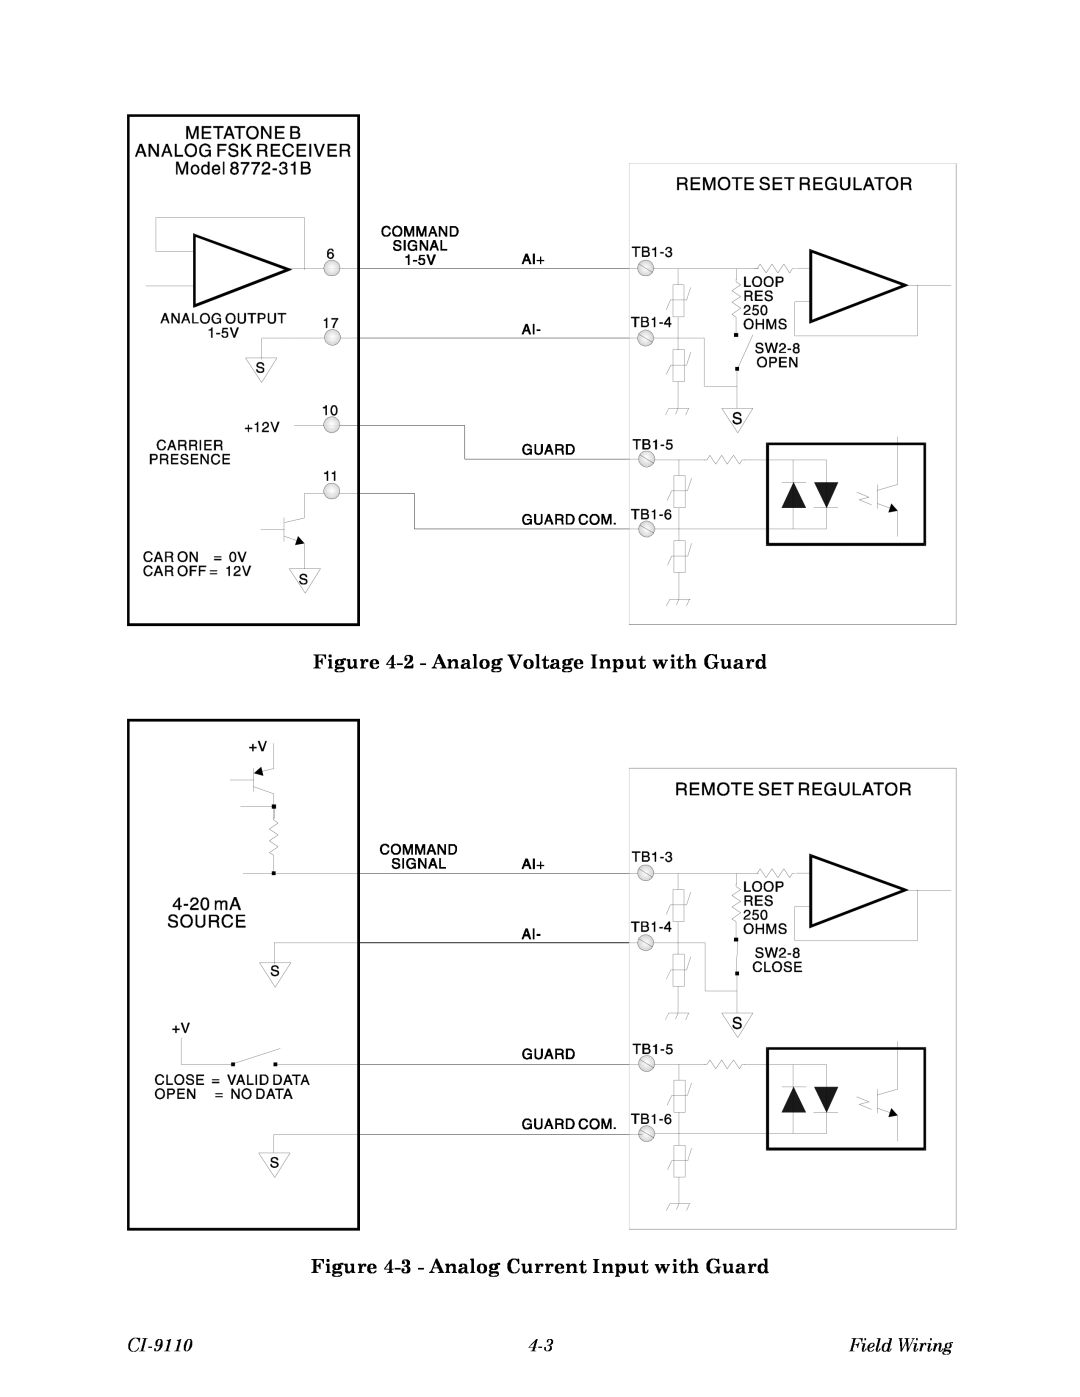 Emerson Process Management 9110-00A 2 - Analog Voltage Input with Guard, 3 - Analog Current Input with Guard, CI-9110 